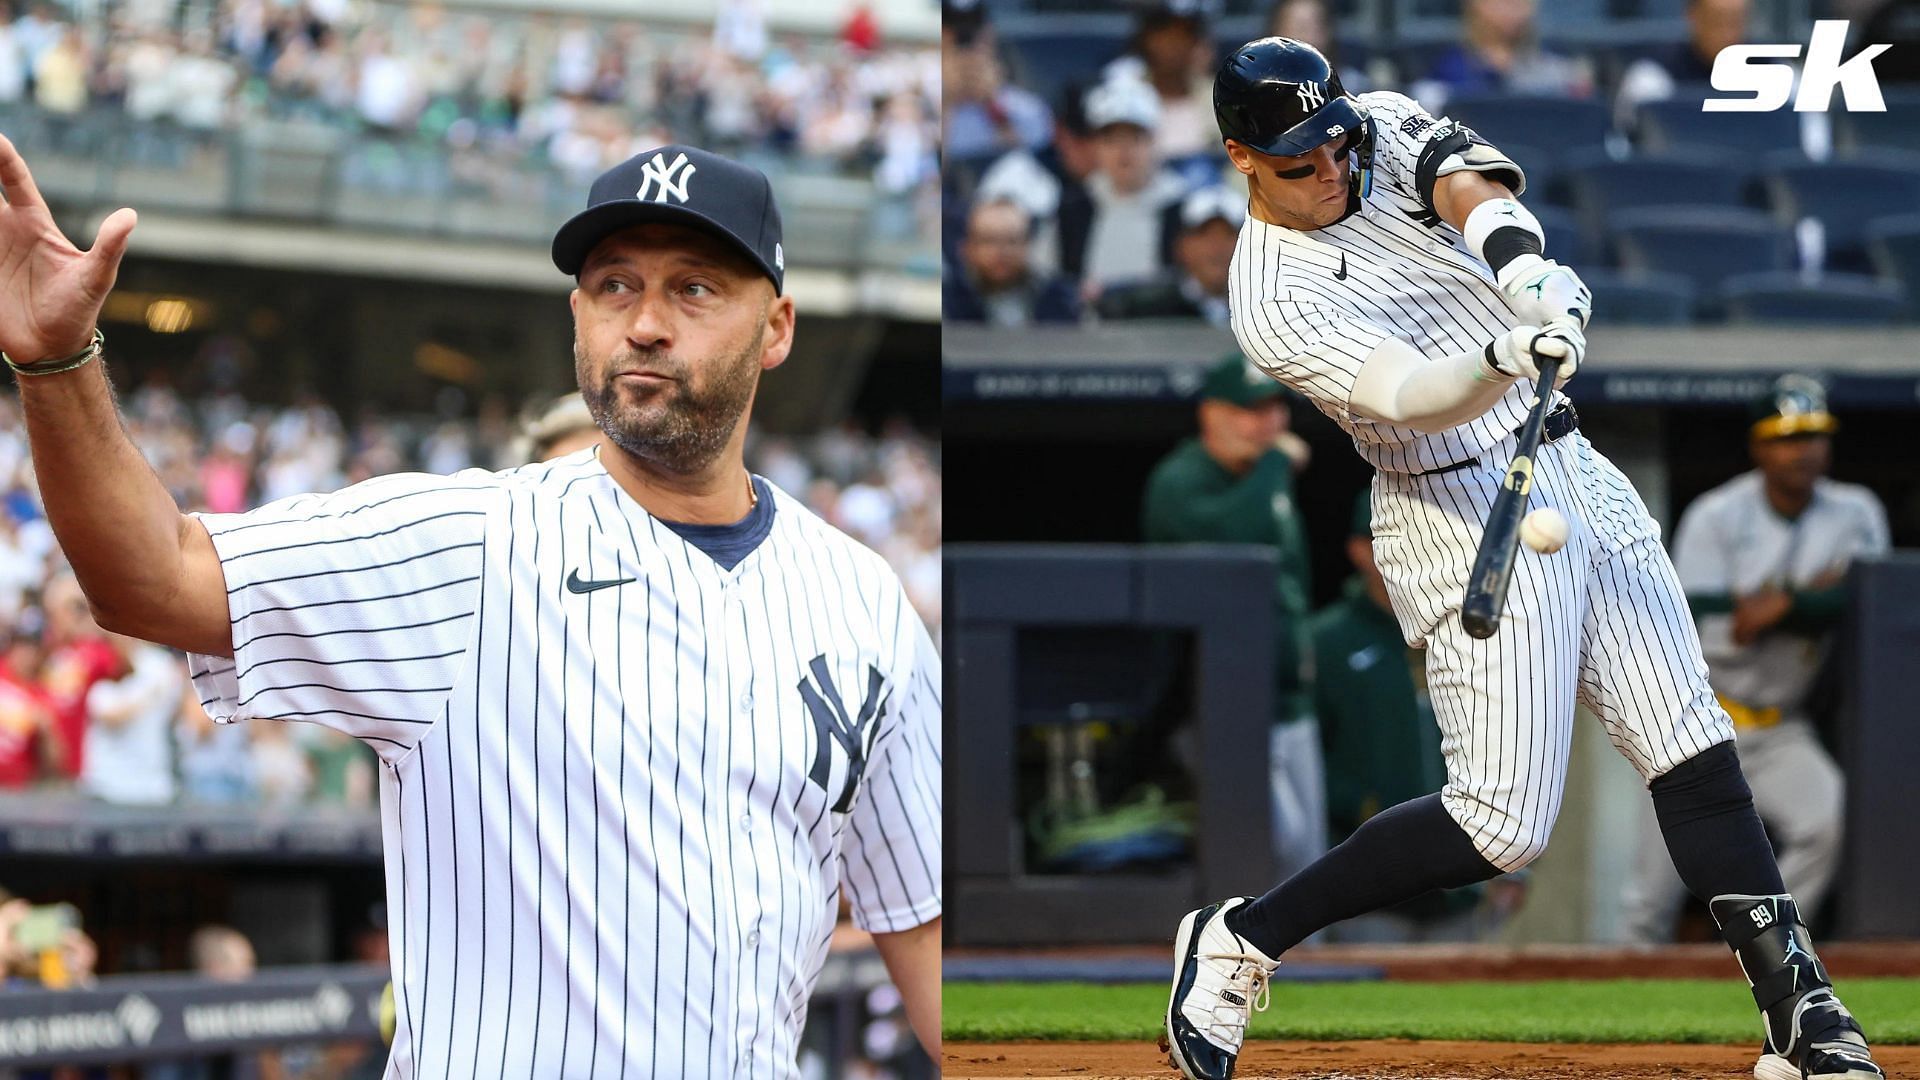 New York superstar Aaron Judge has surpassed Derek Jeter on the Yankees all-time home run list